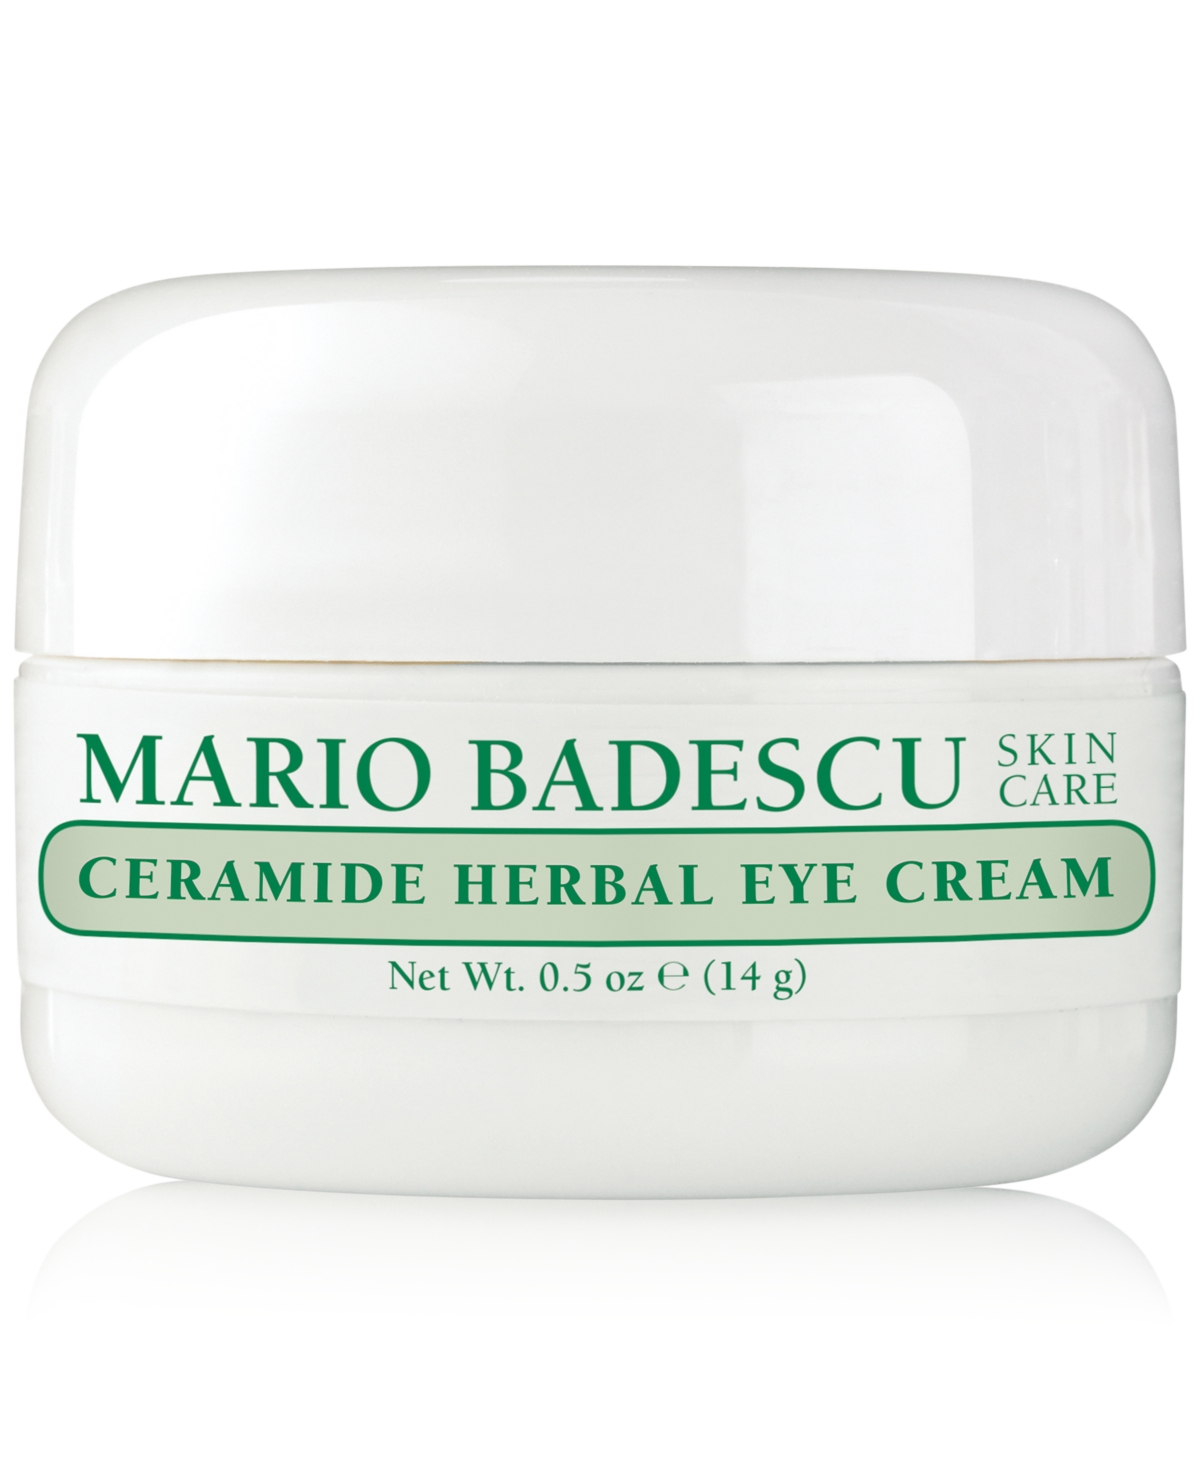 Ceramide Herbal Eye Cream, 0.5-oz.